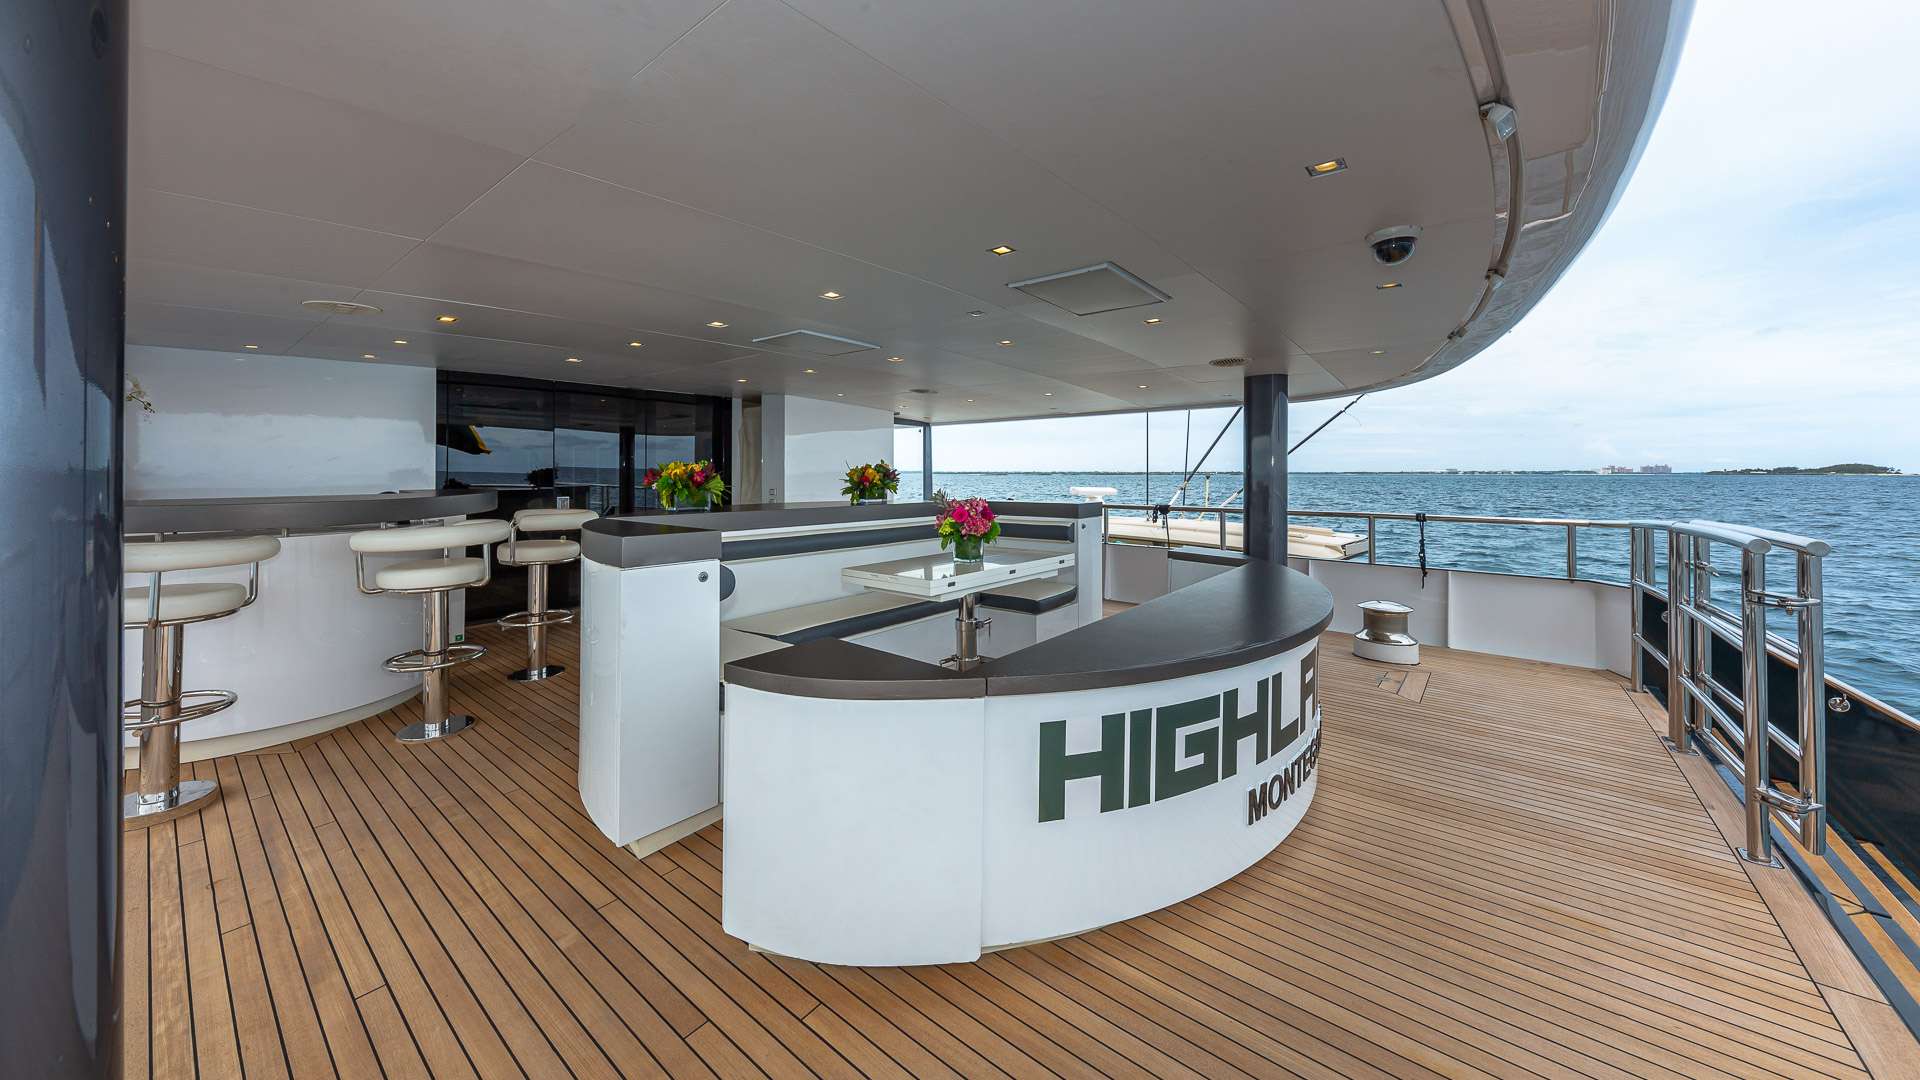 HIGHLANDER - Superyacht charter British Virgin Island & Boat hire in Caribbean, Bahamas, Florida East Coast, Cuba, Dominican Republic, Turks and Caicos, USA South East 5